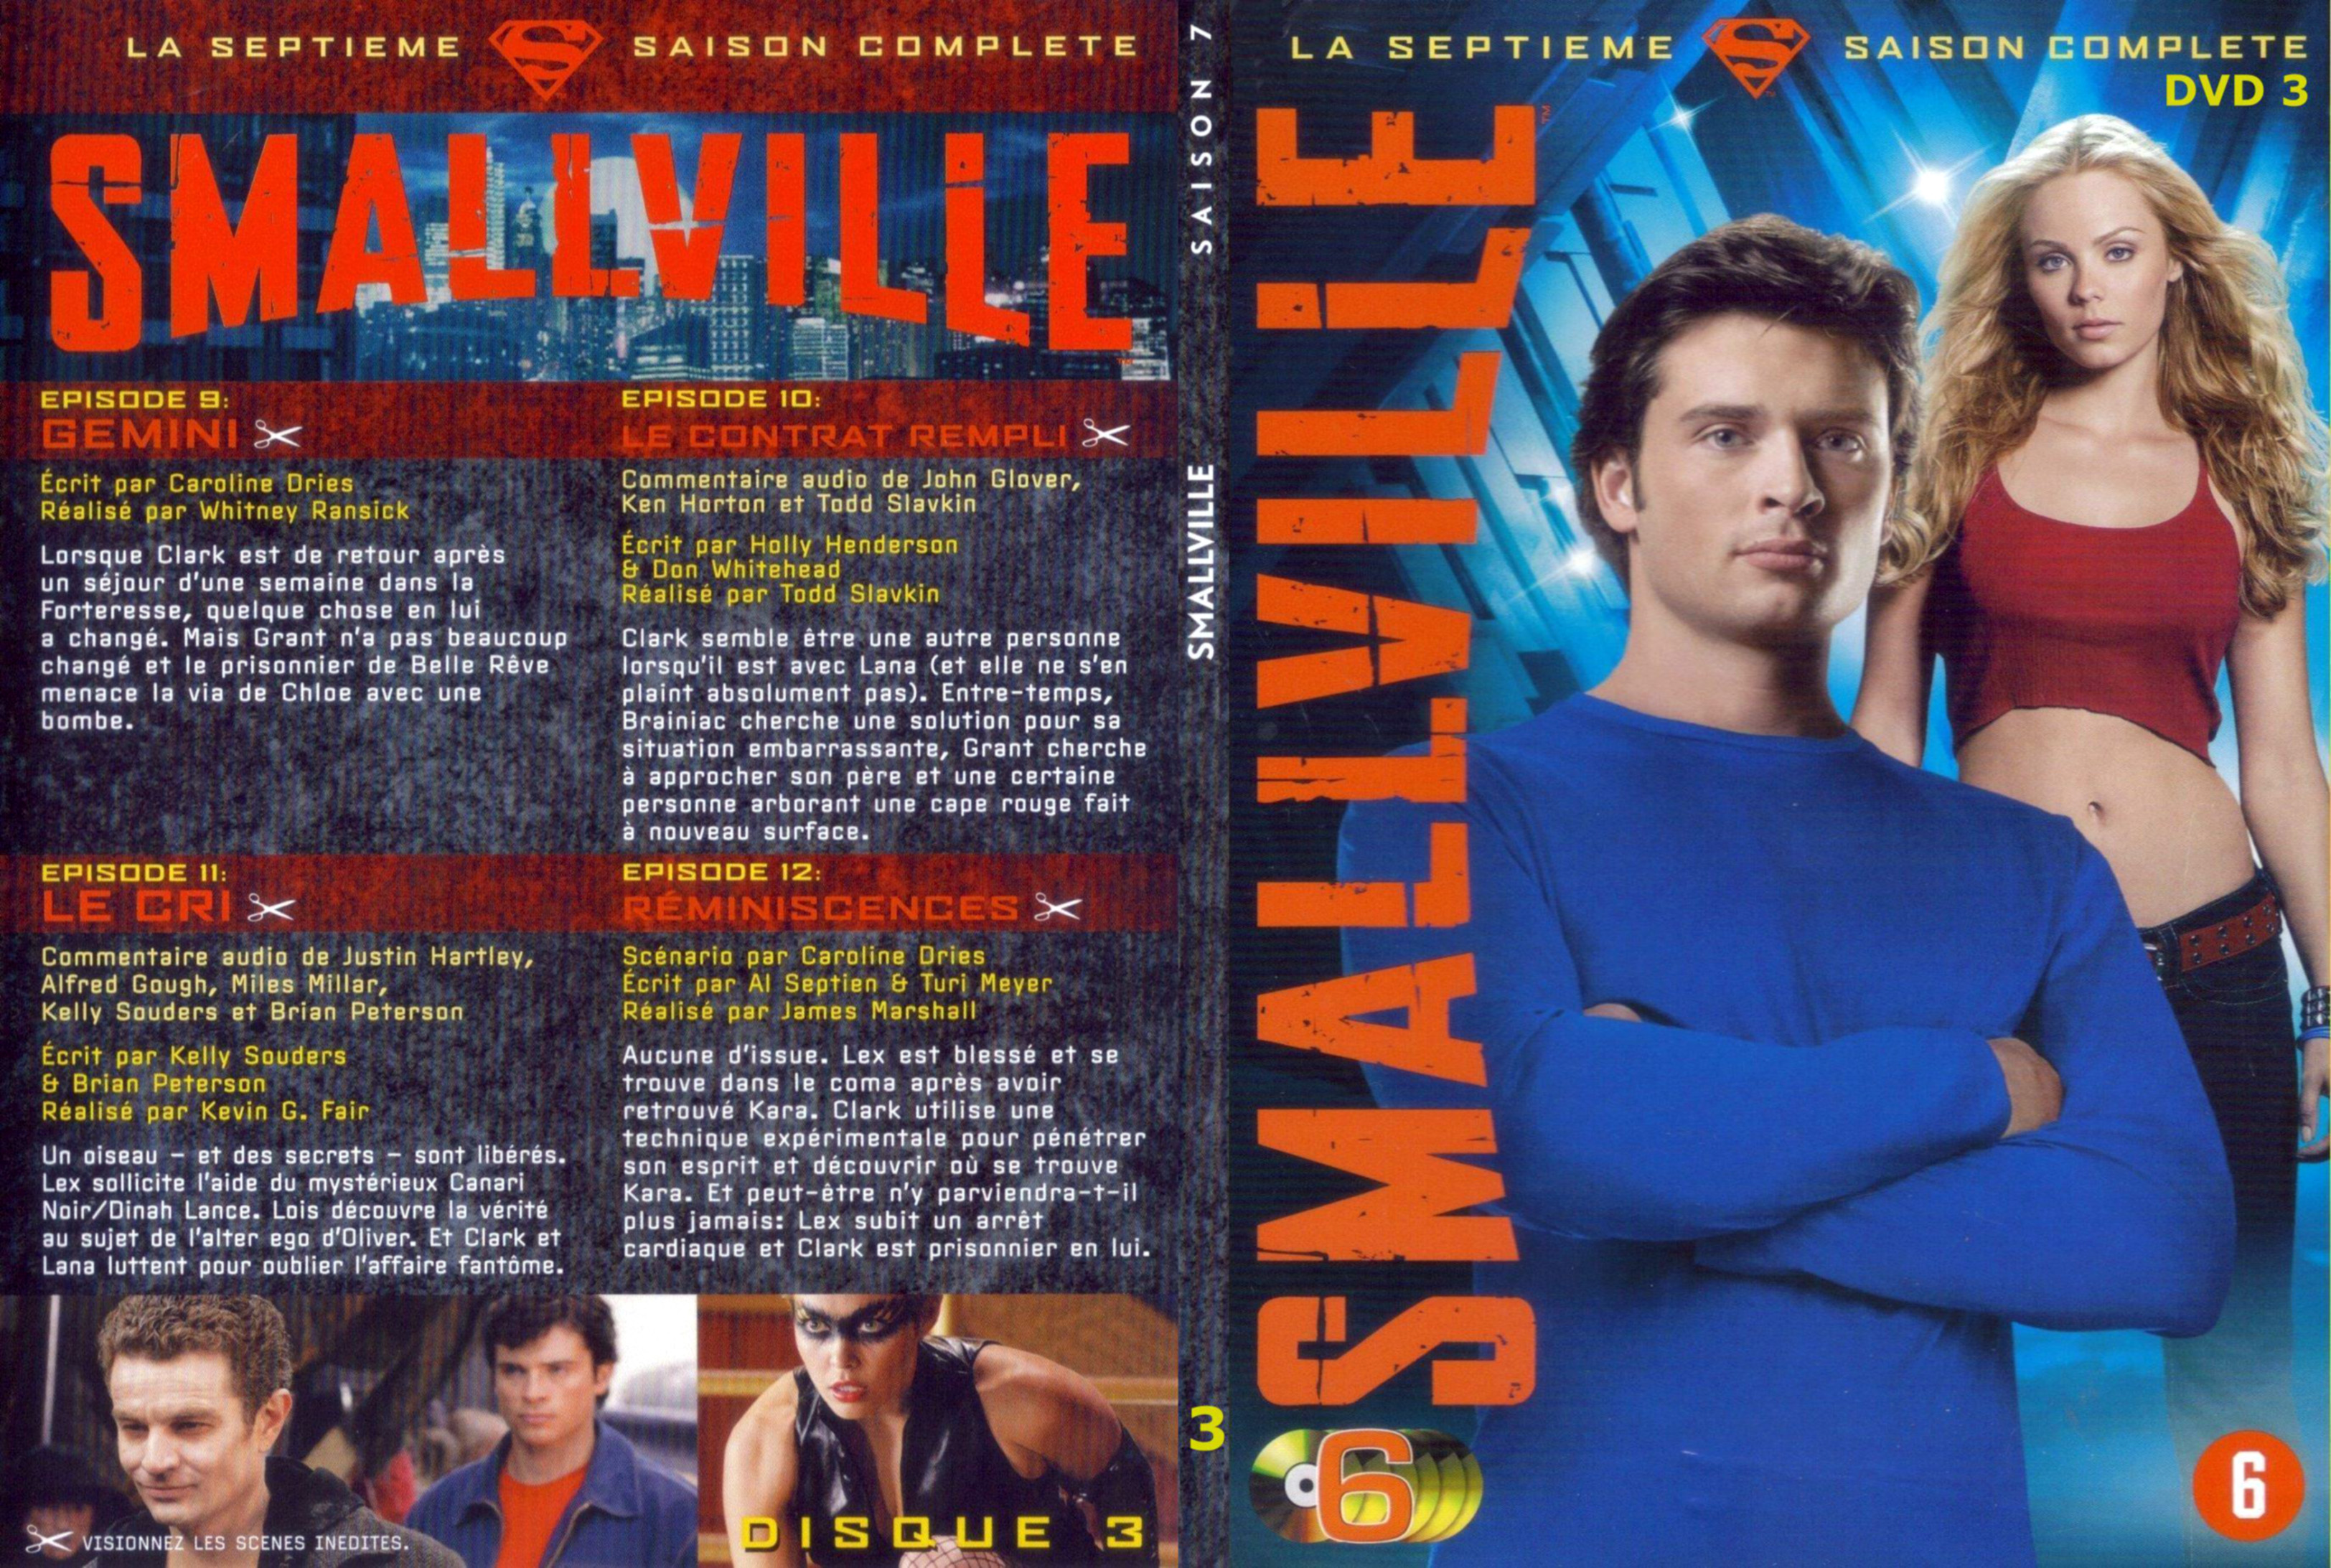 Jaquette DVD Smallville saison 7 DVD 3